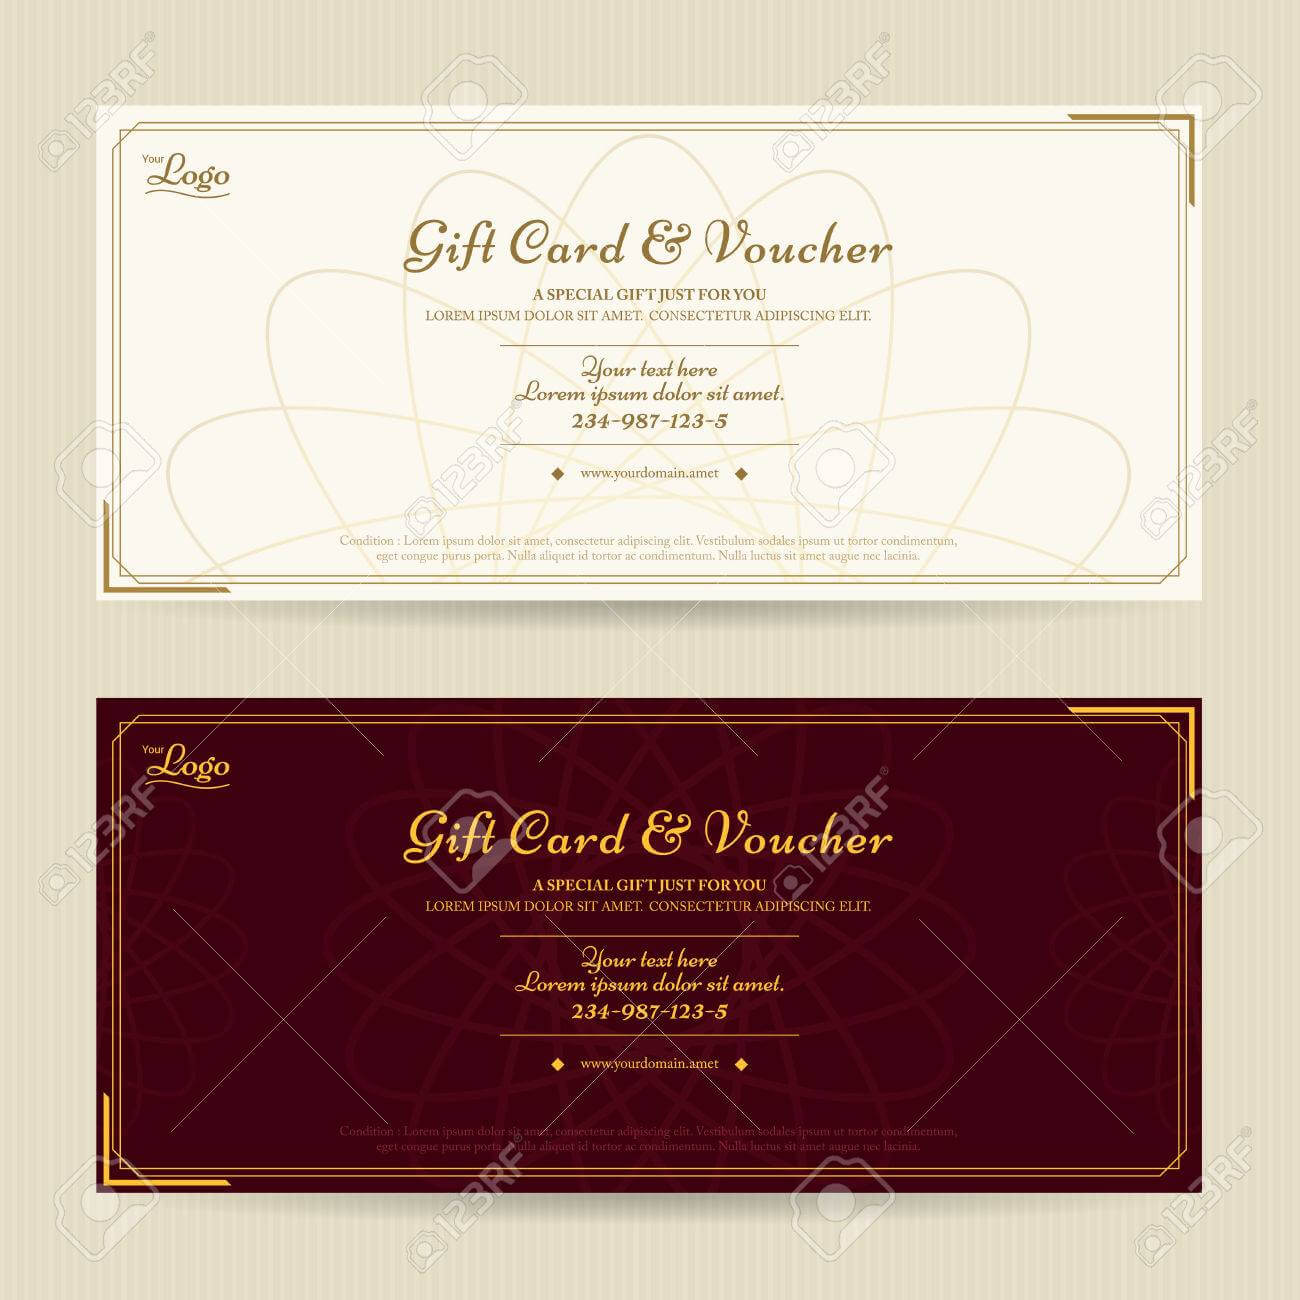 Elegant Gift Voucher Or Gift Card Template With Gold Border With Elegant Gift Certificate Template